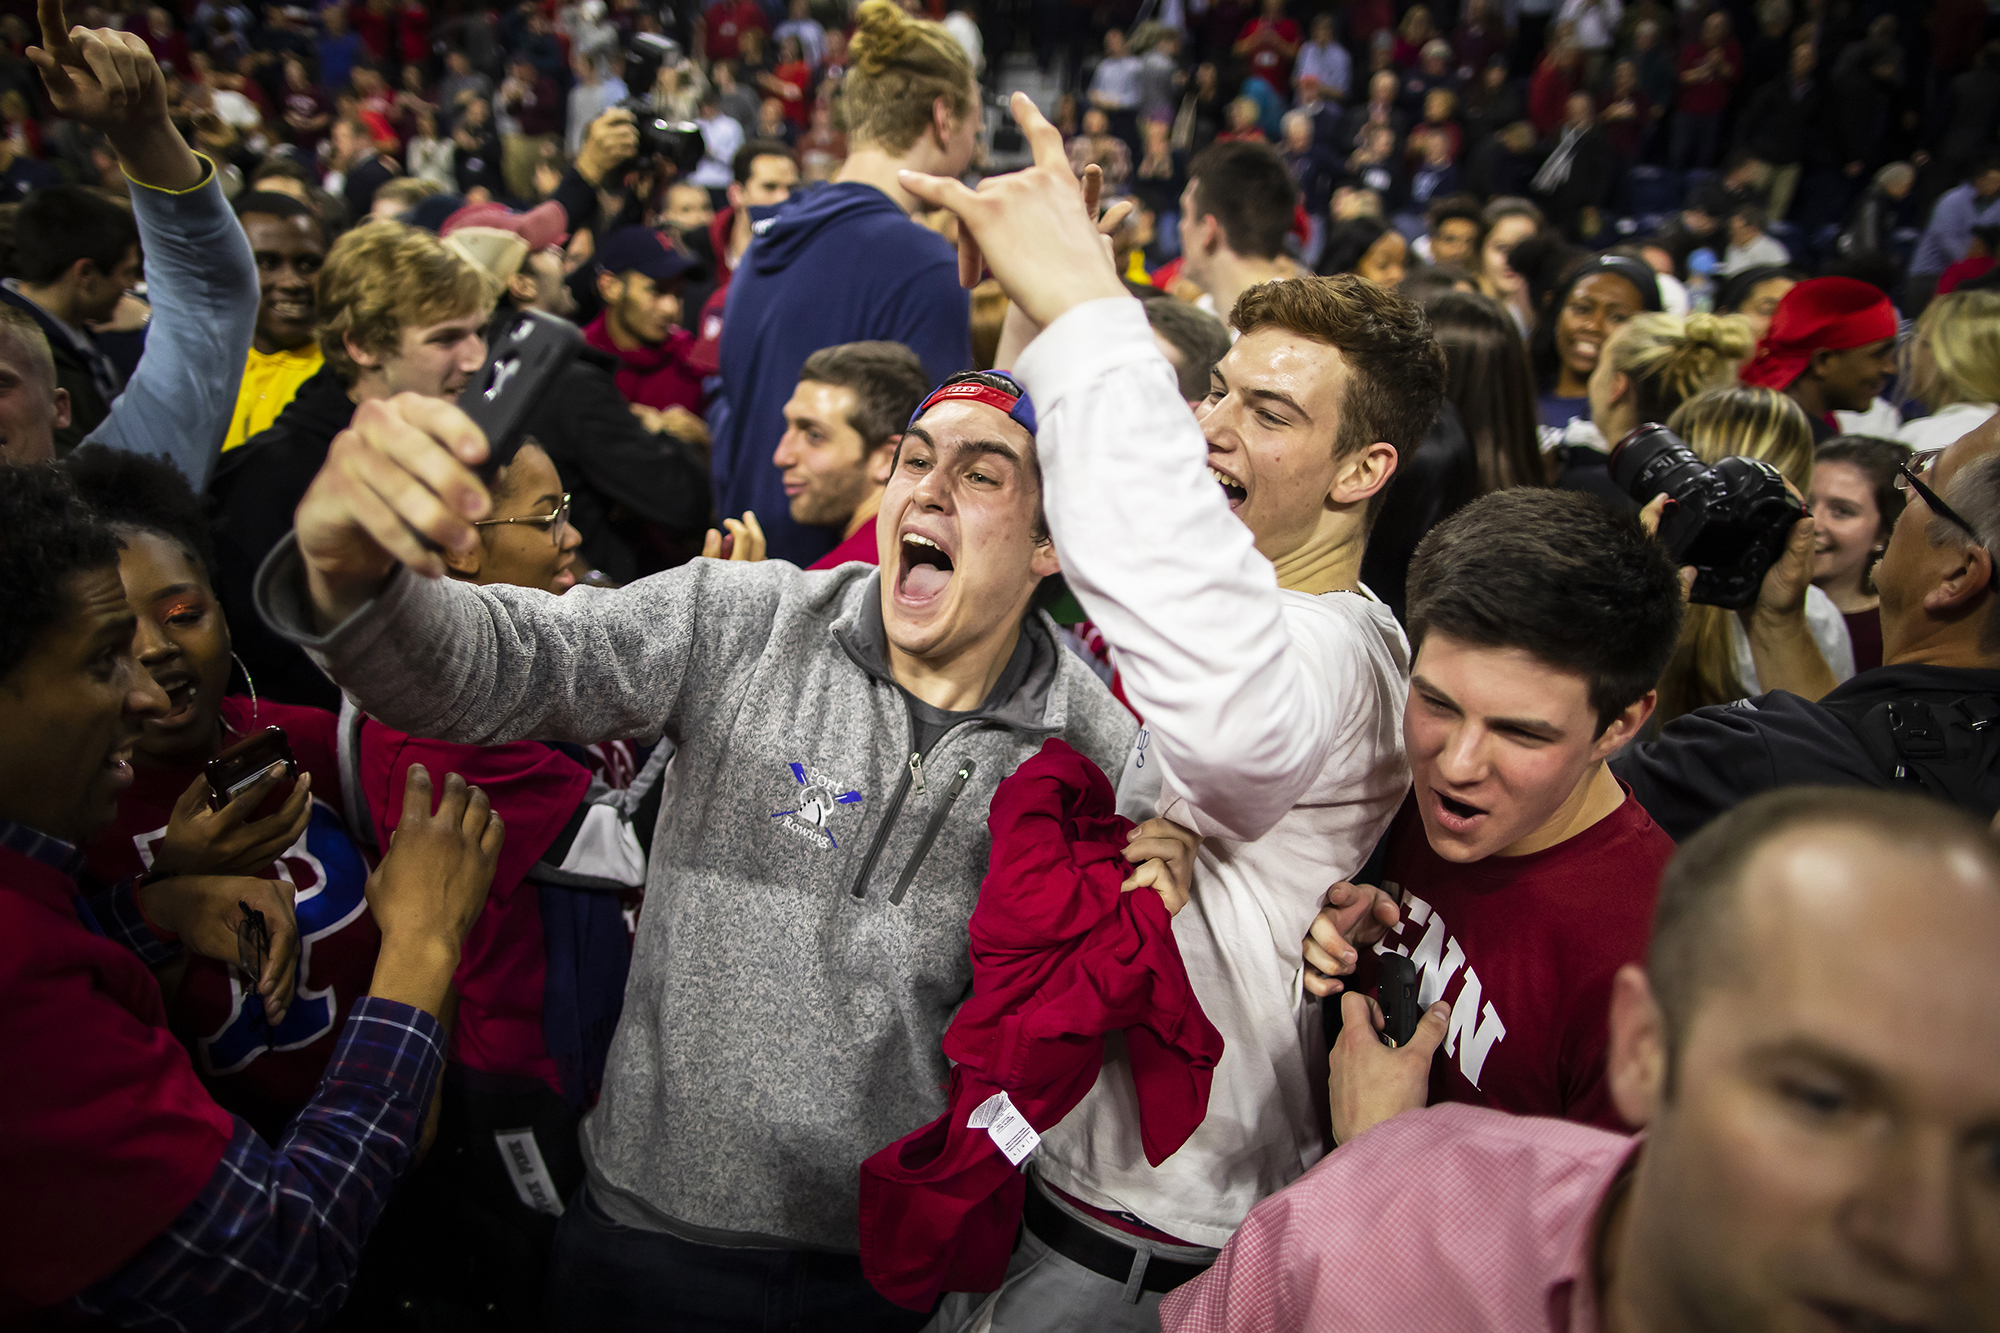 Penn basketball fans celebrate on the court after beating Villanova